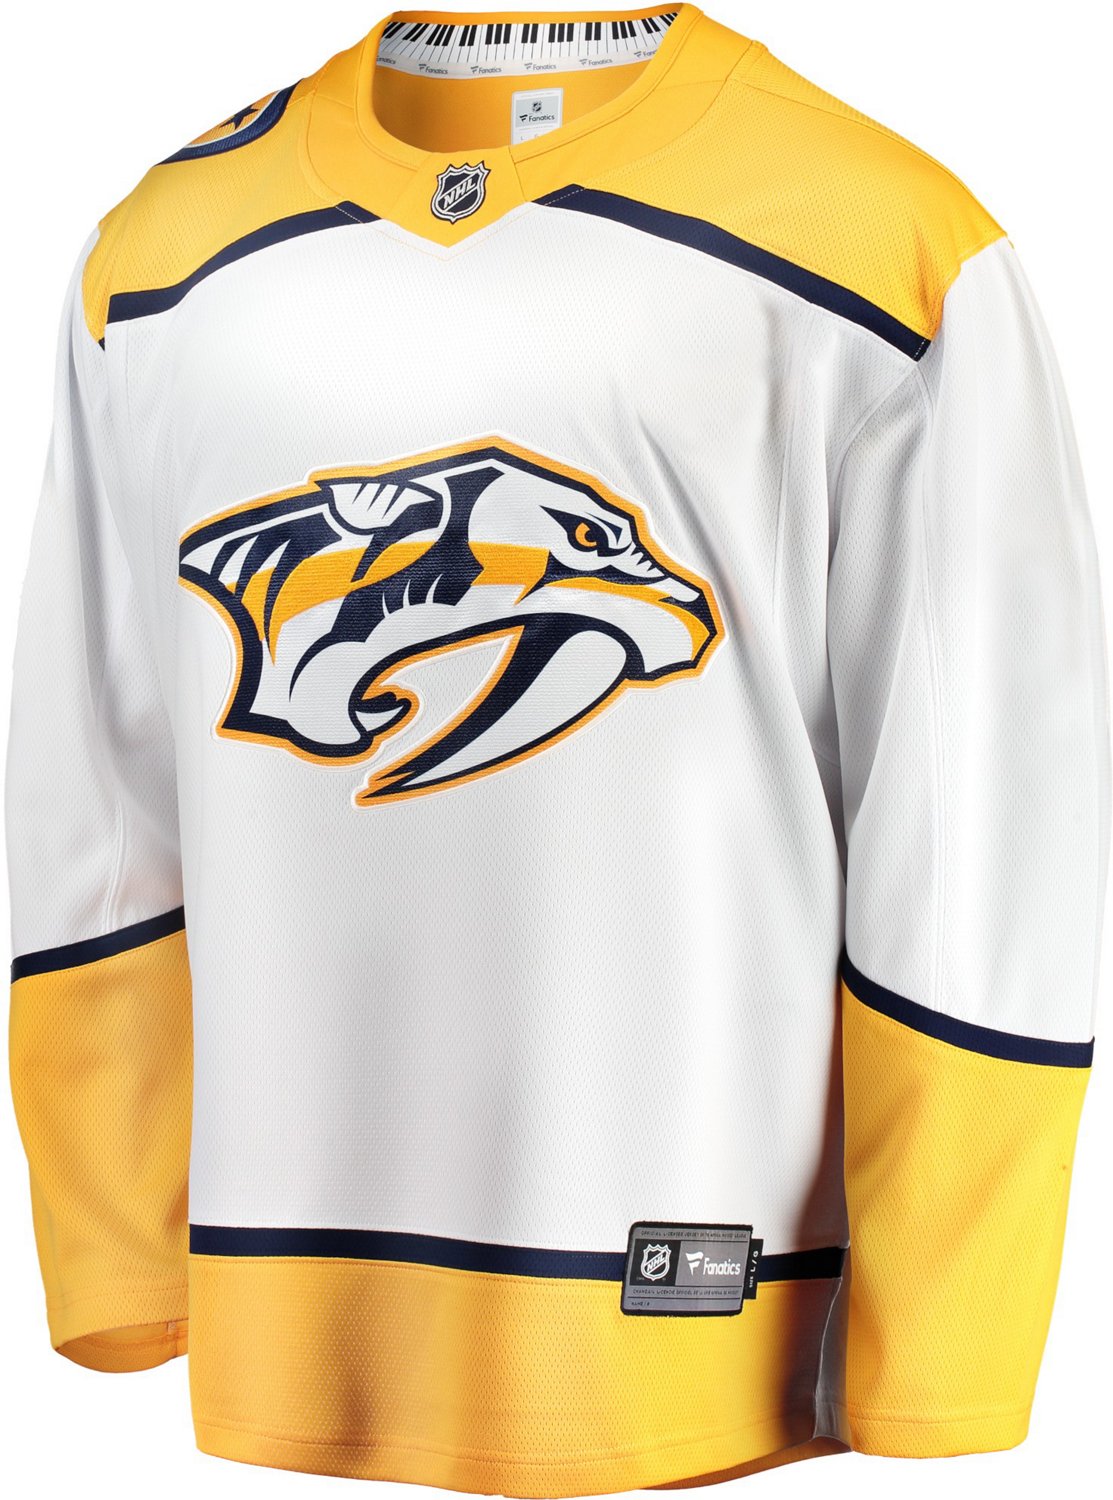 Men's Nashville Predators Gear & Hockey Gifts, Men's Predators Apparel,  Guys' Clothes